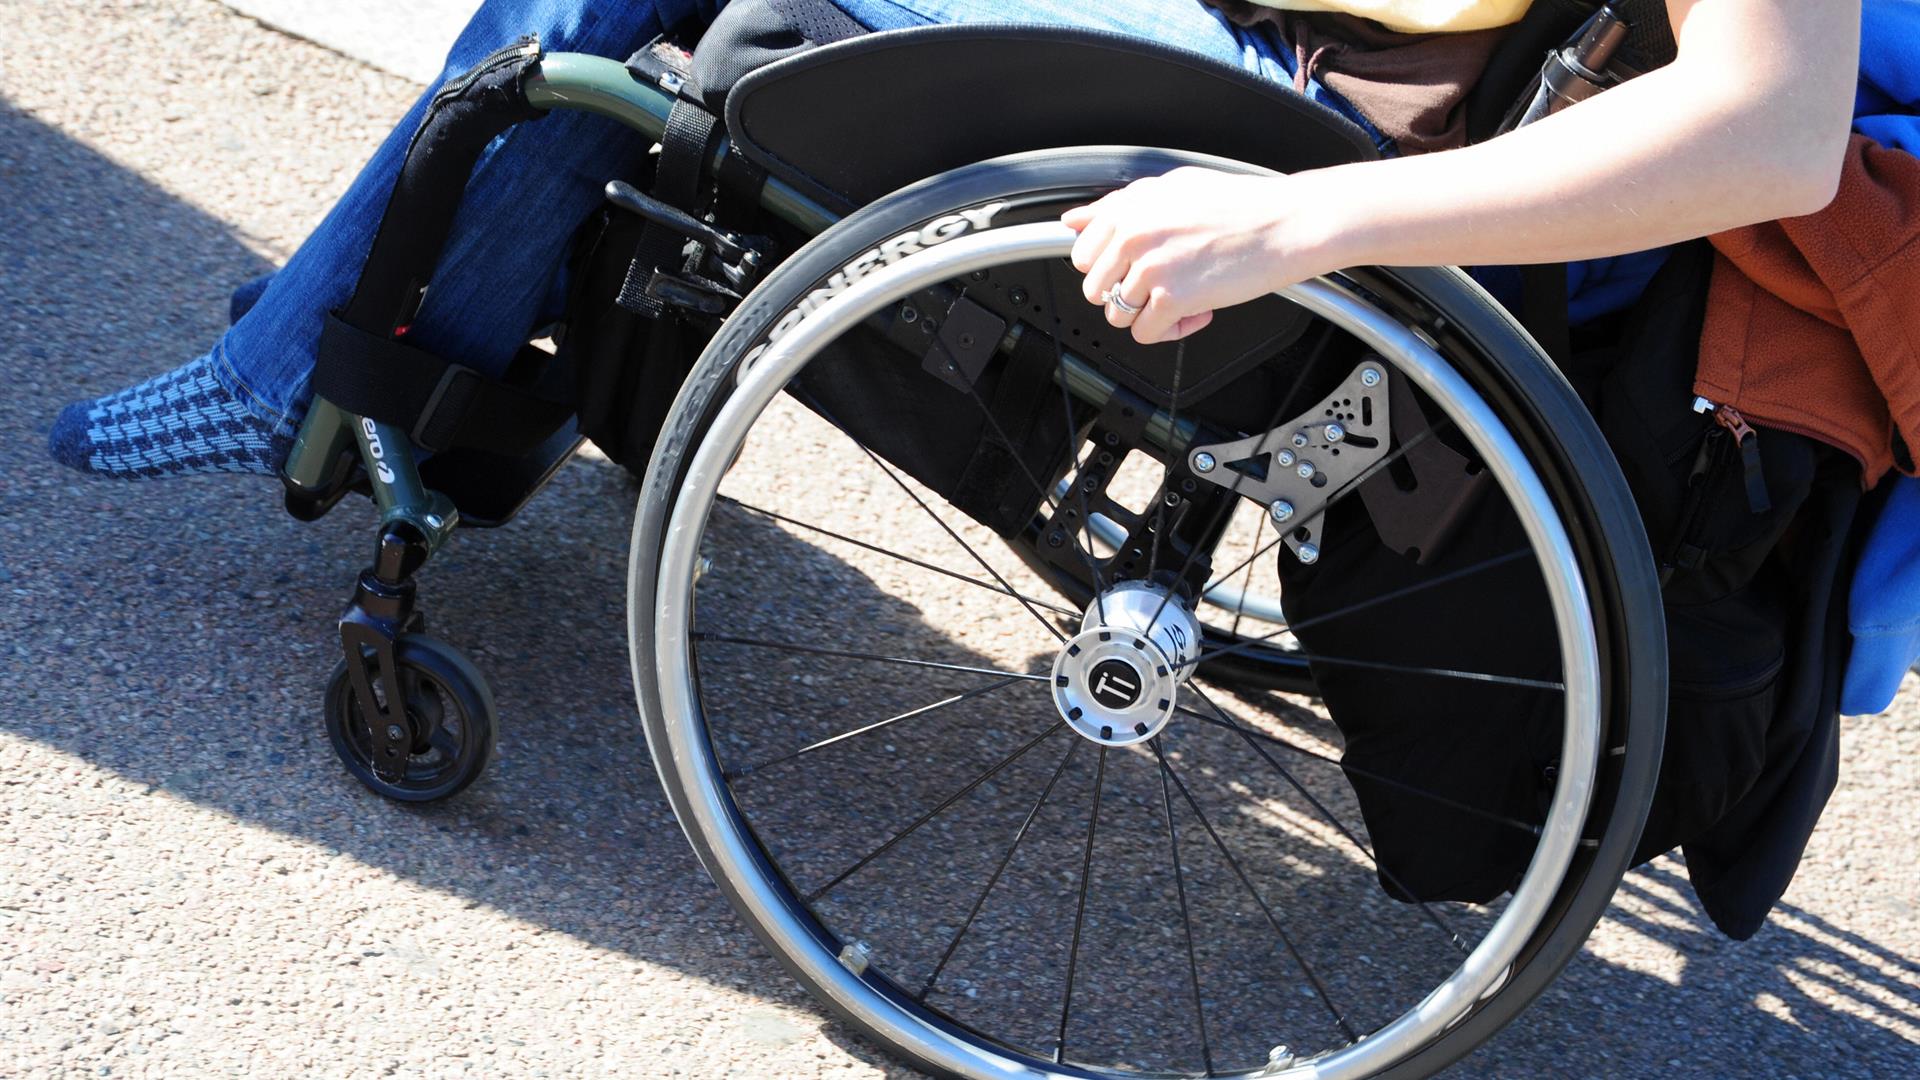 Disabile carrozzina KAREN BLEIER/AFP/Getty Images